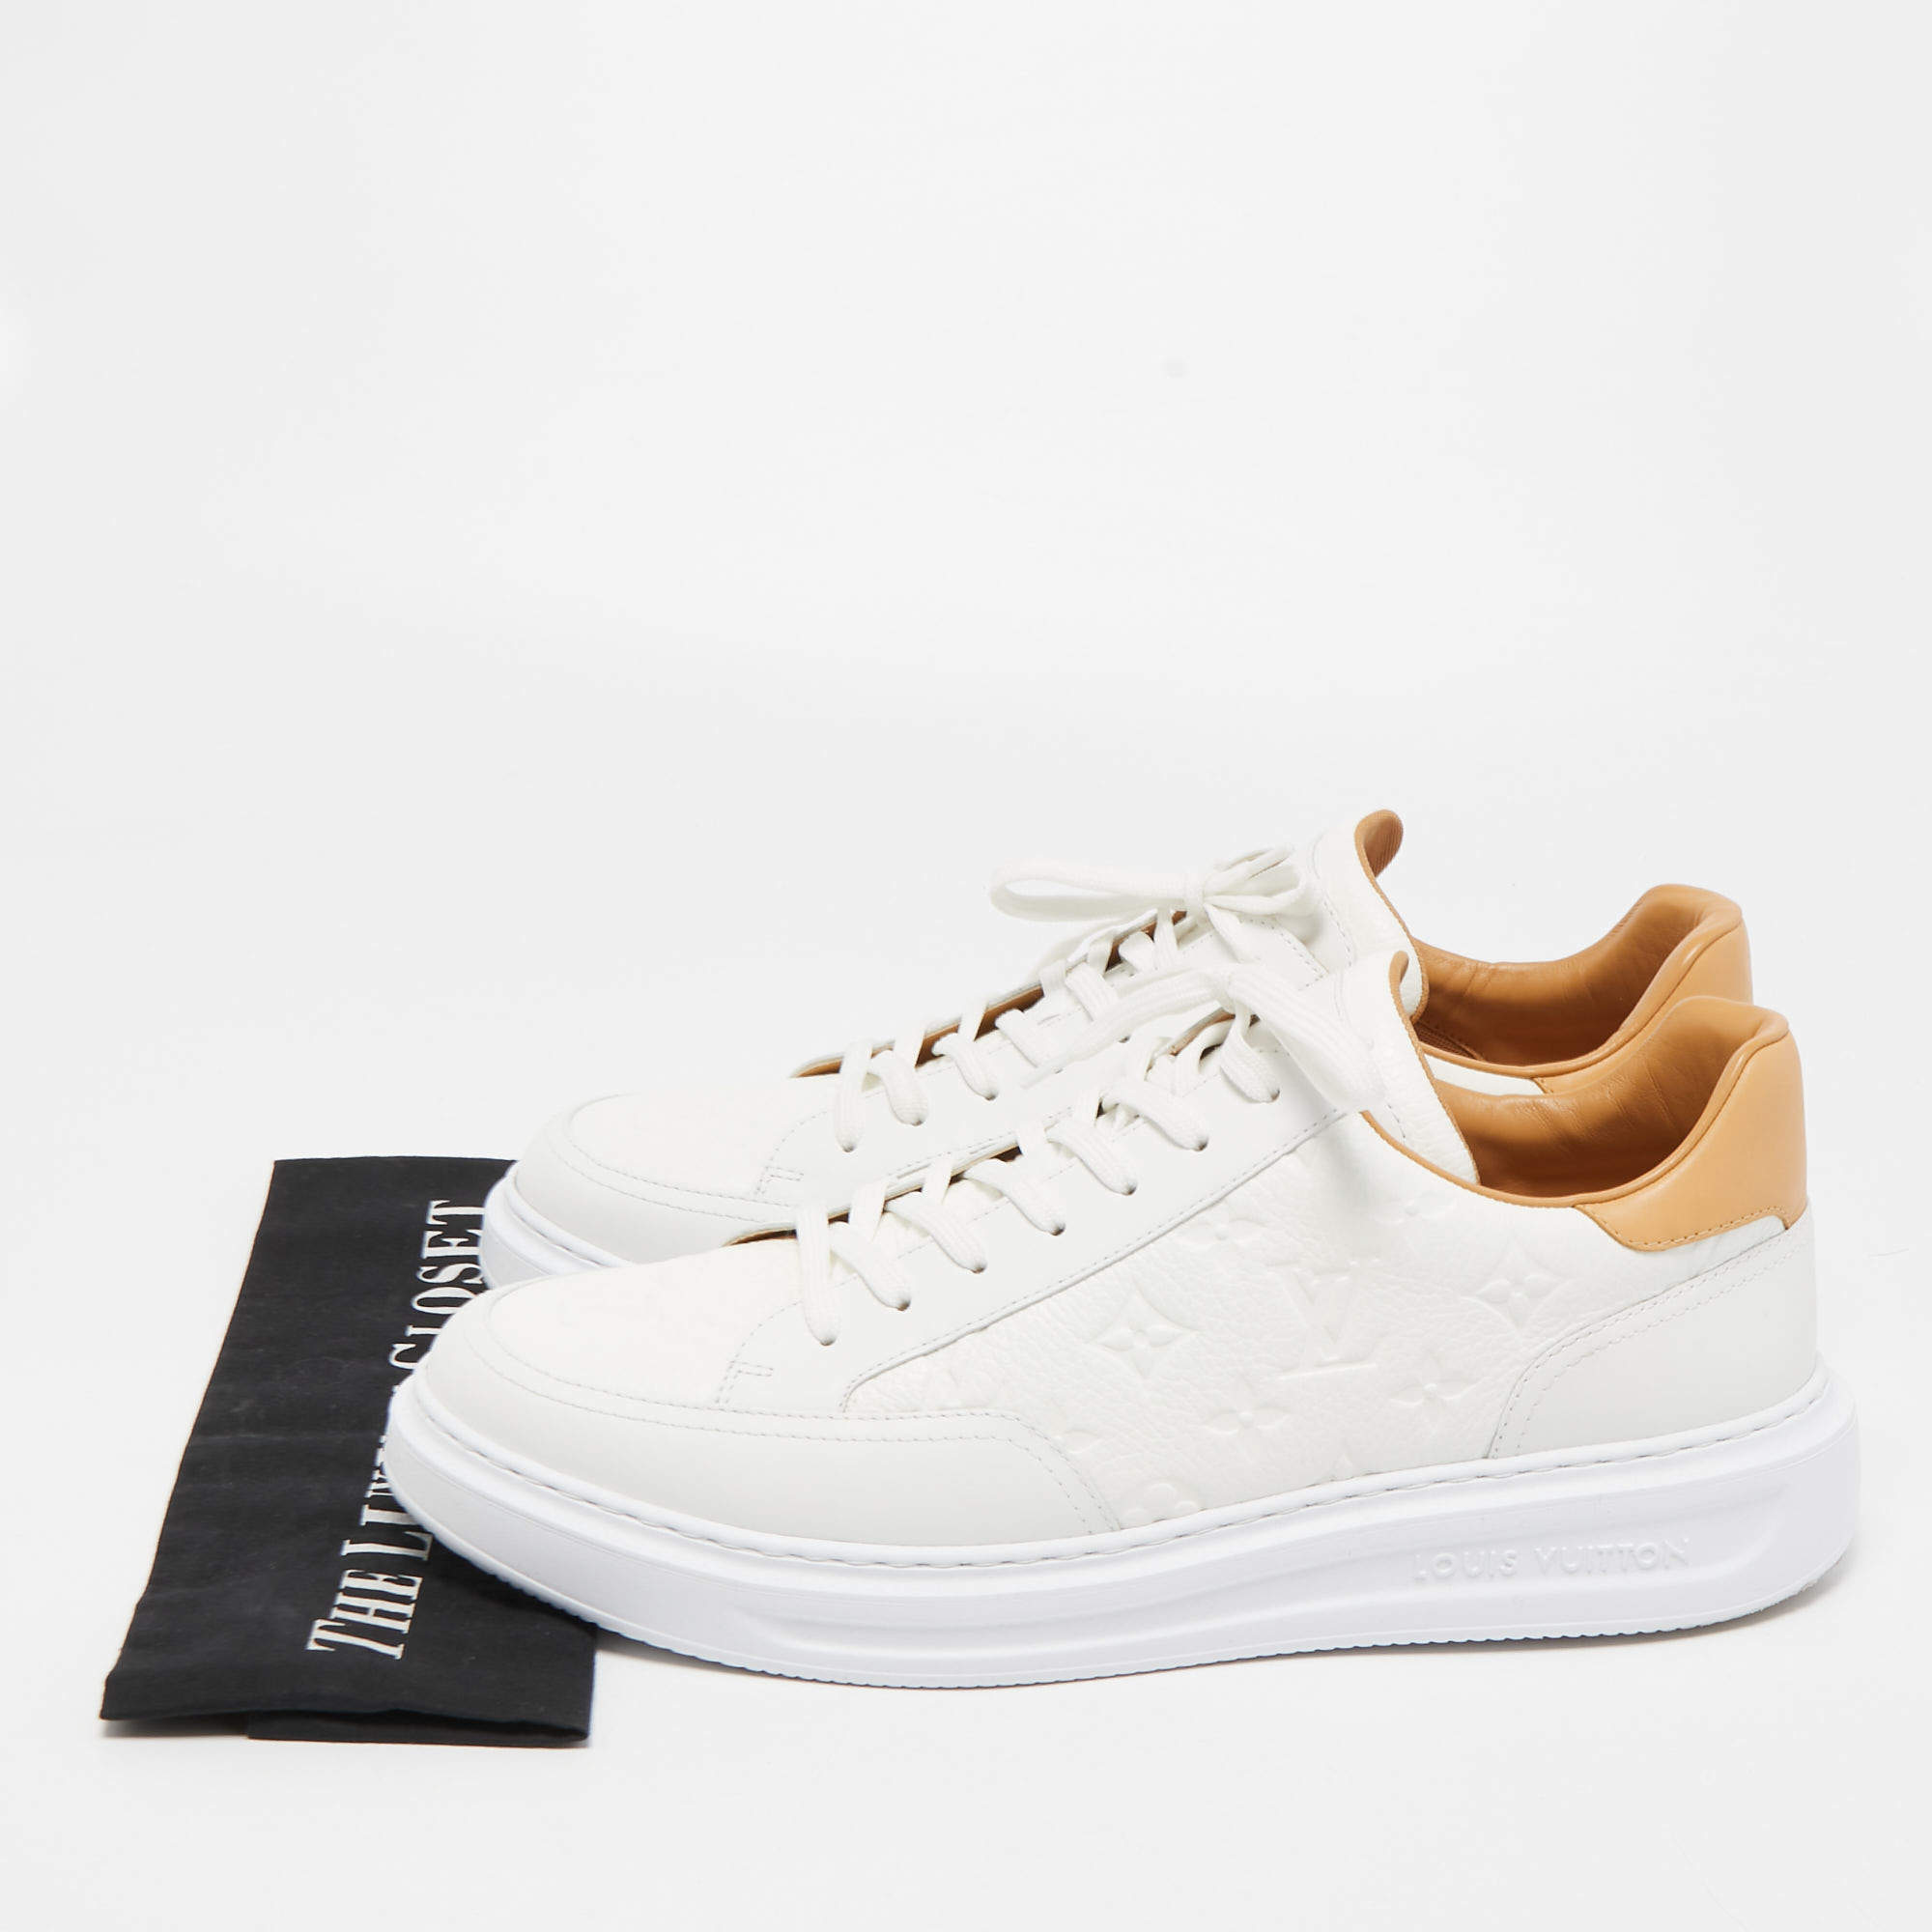 Louis Vuitton Beverly Hills Sneaker White. Size 09.0